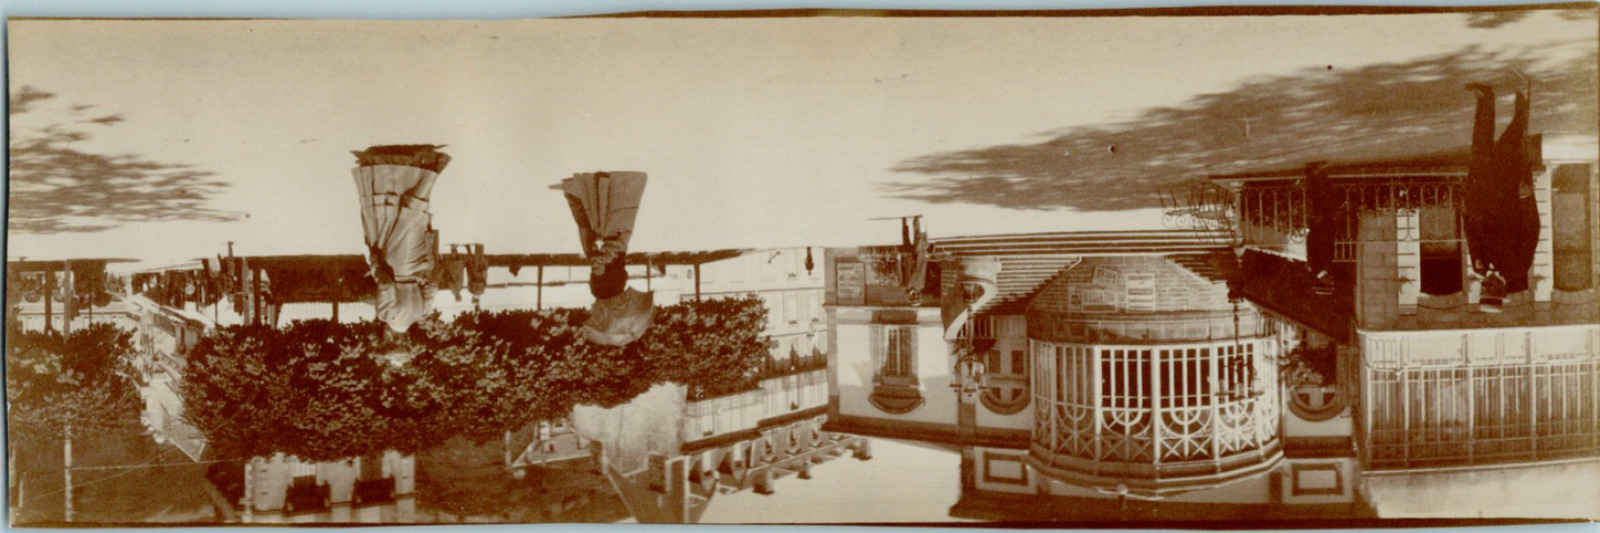 France, Vintage Print ID Park & Casino, Kodak Panorama 6x18 Print 